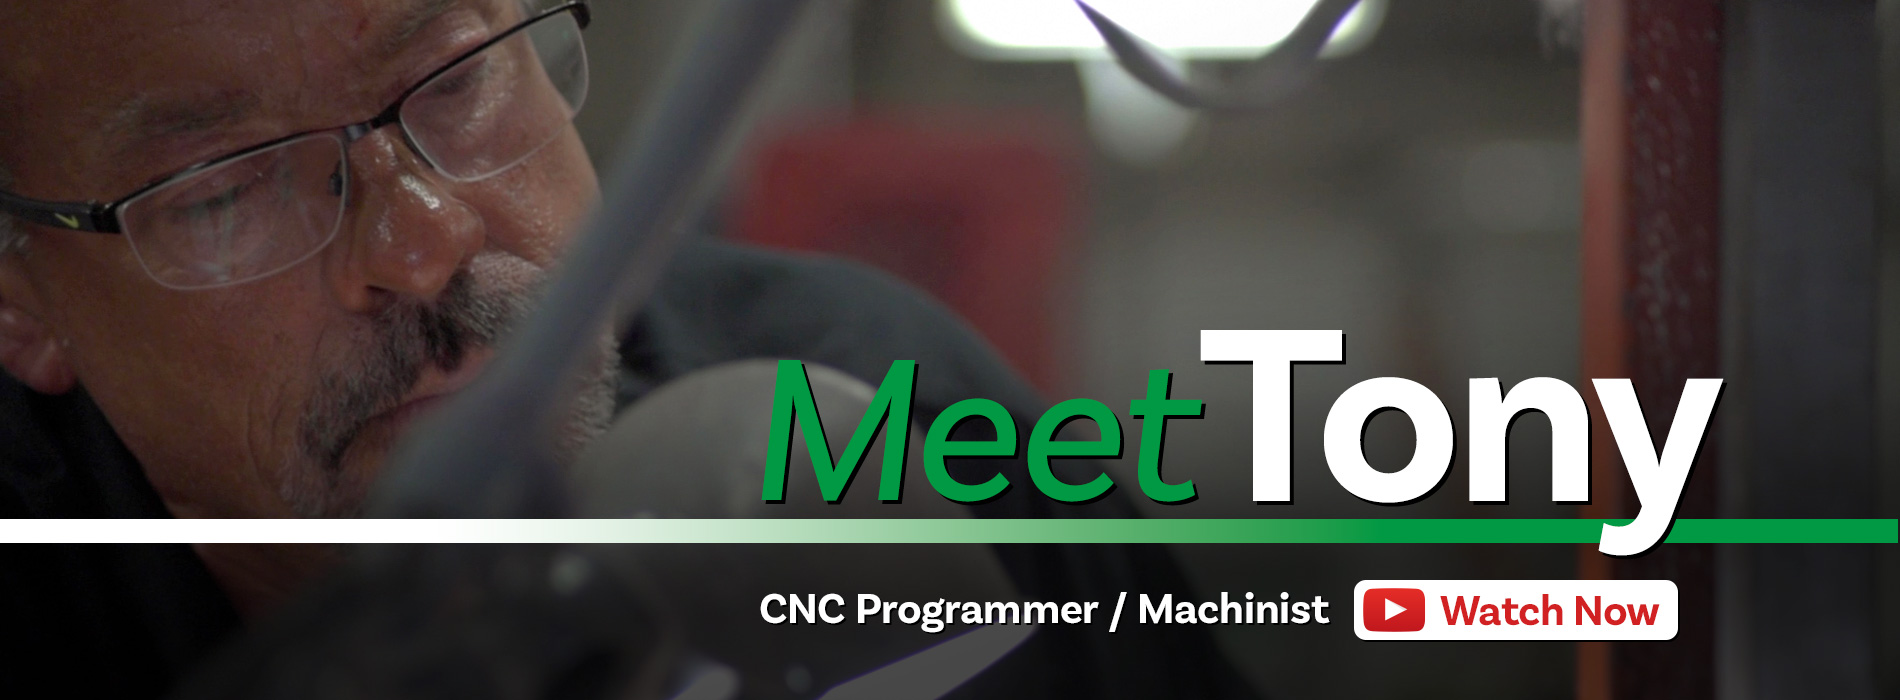 Video: Meet Tony: CNC Programmer / Machinist